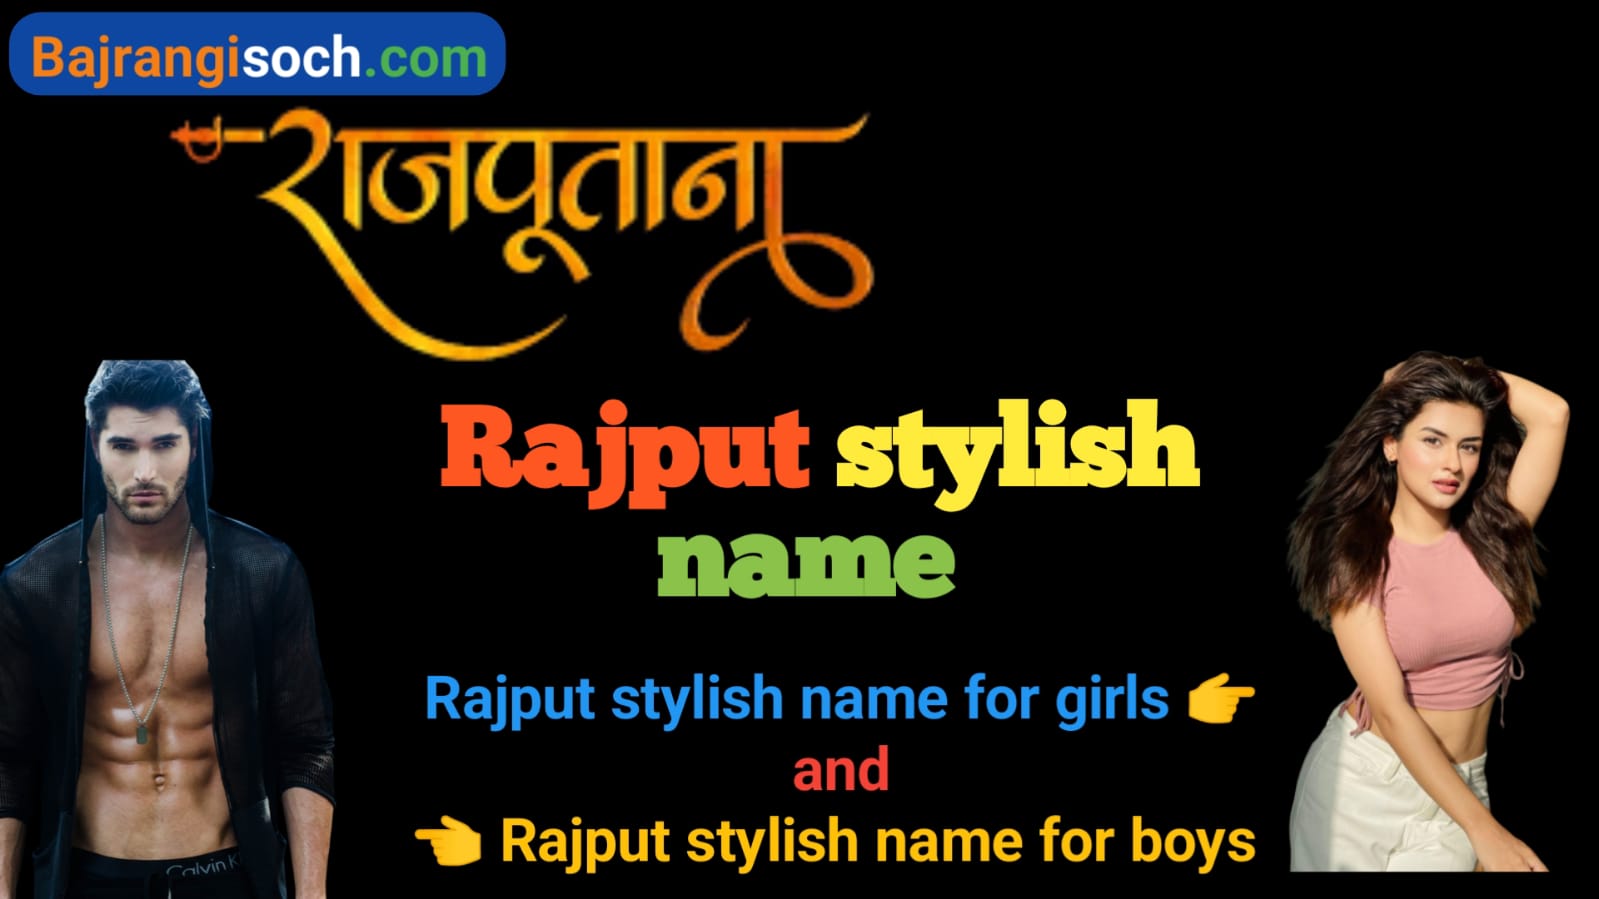 Rajput stylish name